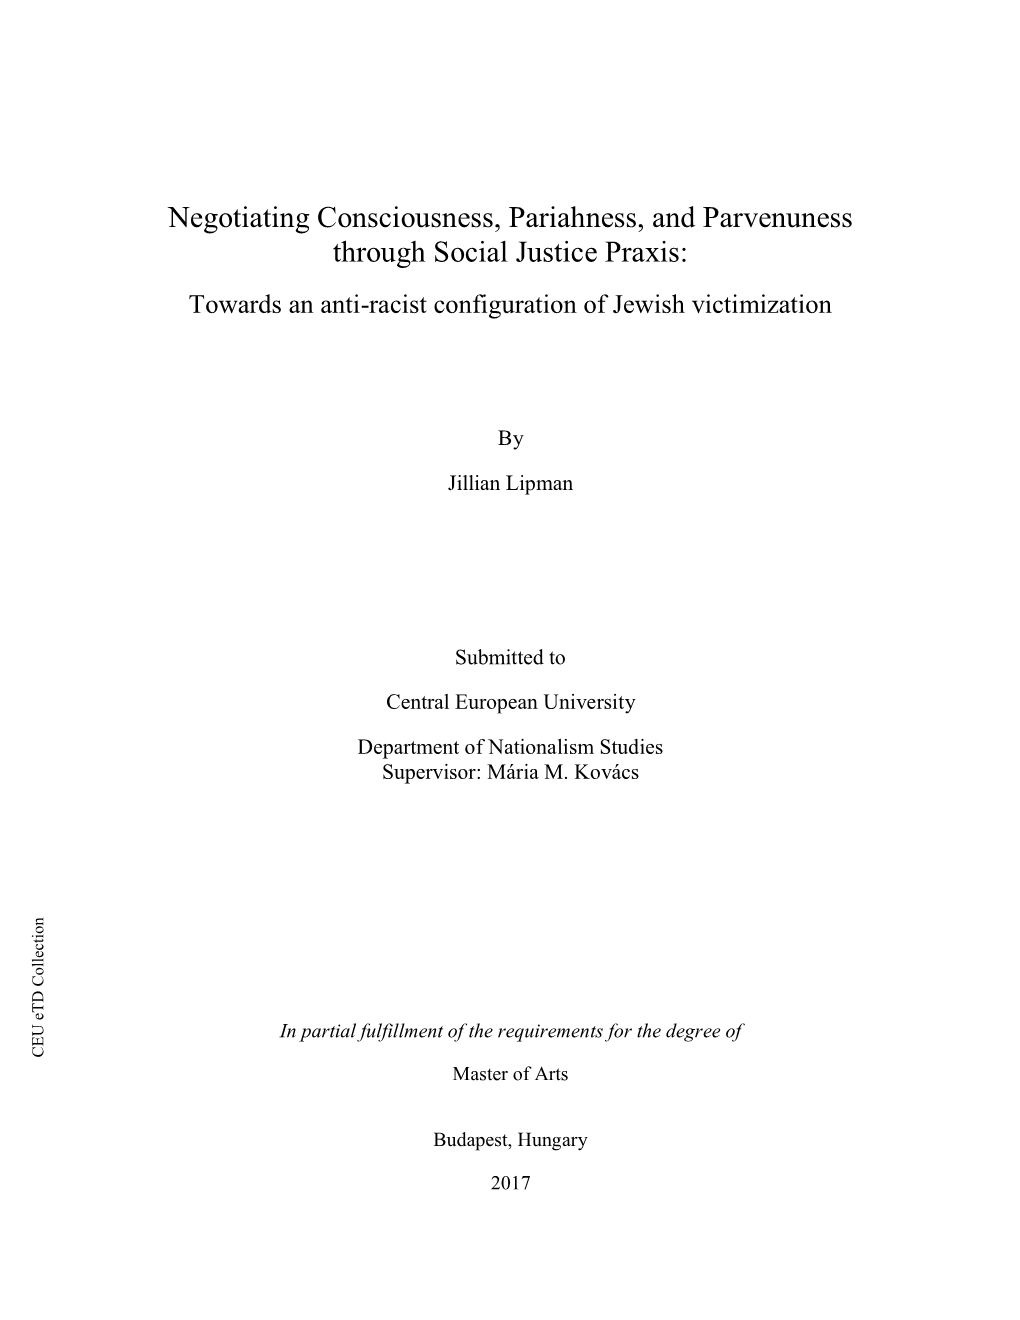 Negotiating Consciousness, Pariahness, and Parvenuness Through Social Justice Praxis: Towards an Anti-Racist Configuration of Jewish Victimization